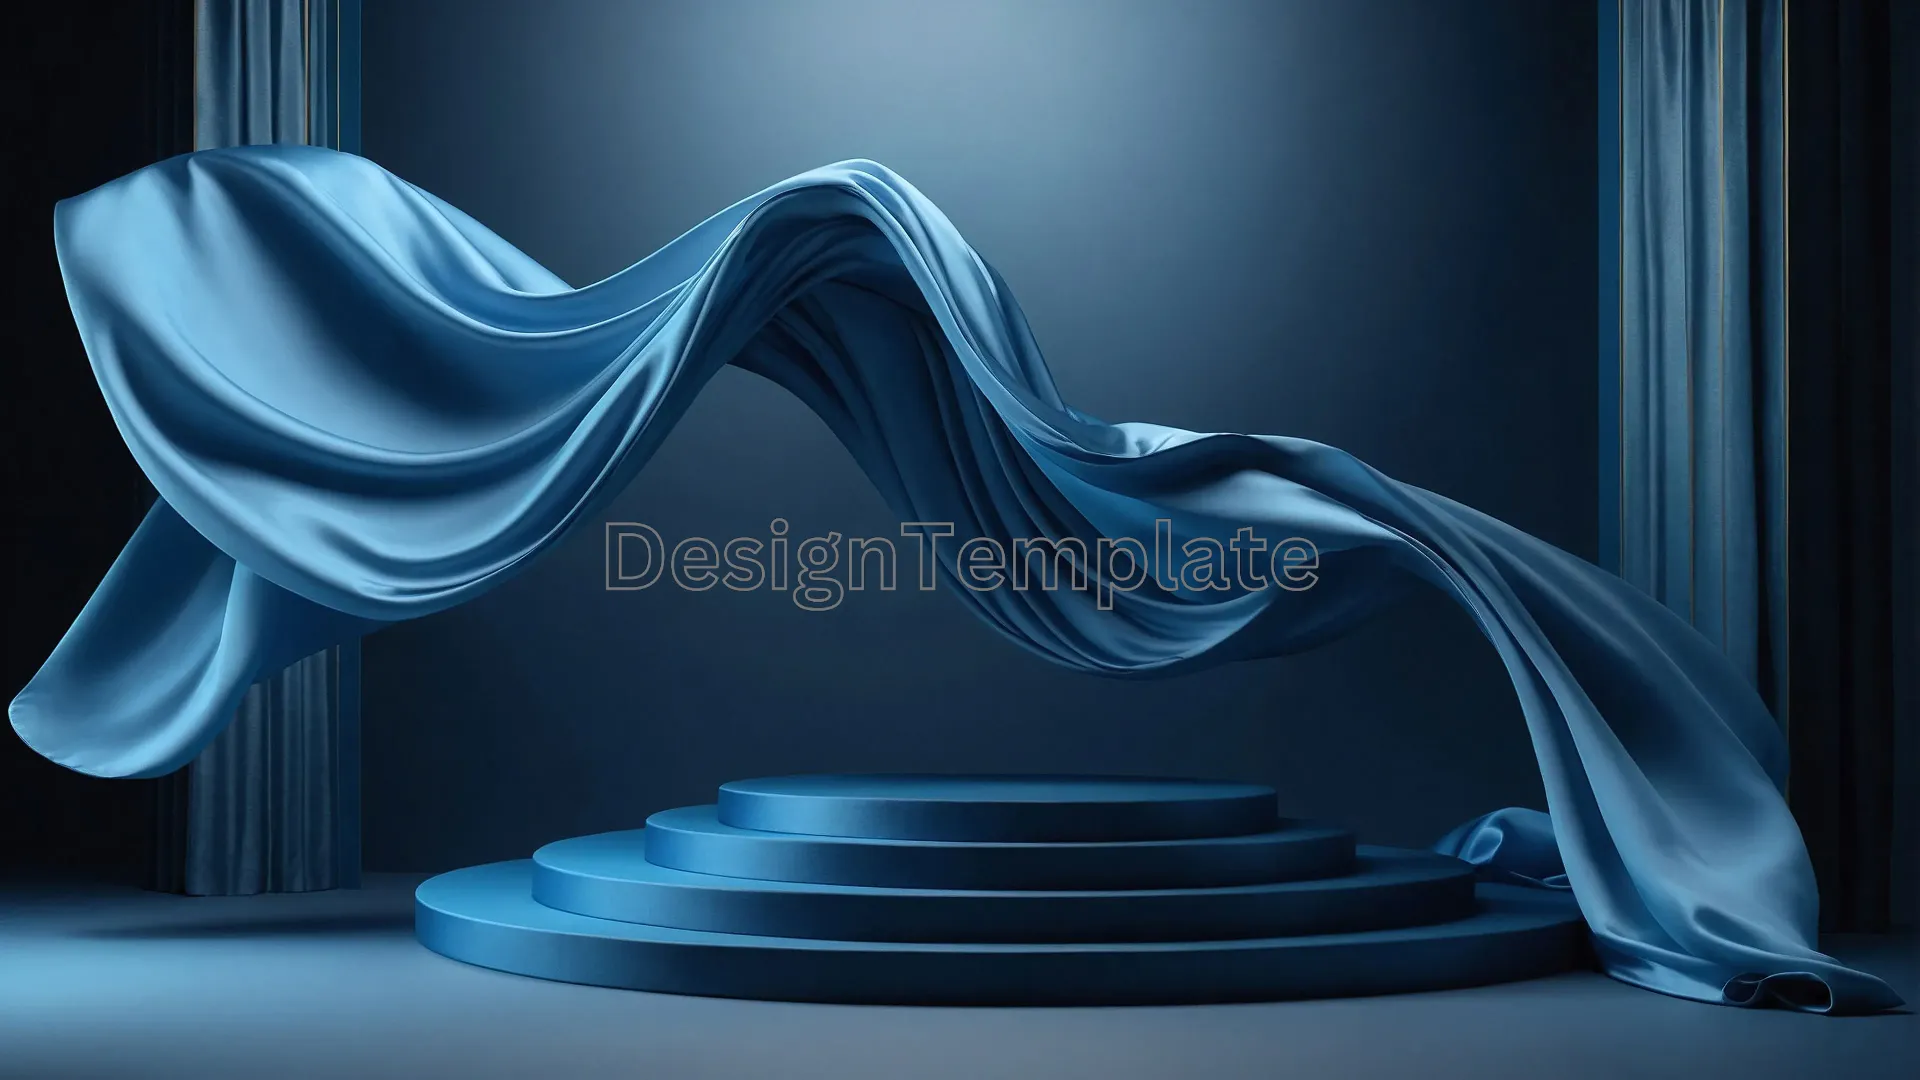 Silk Fabric and 3D Podium Background Image image